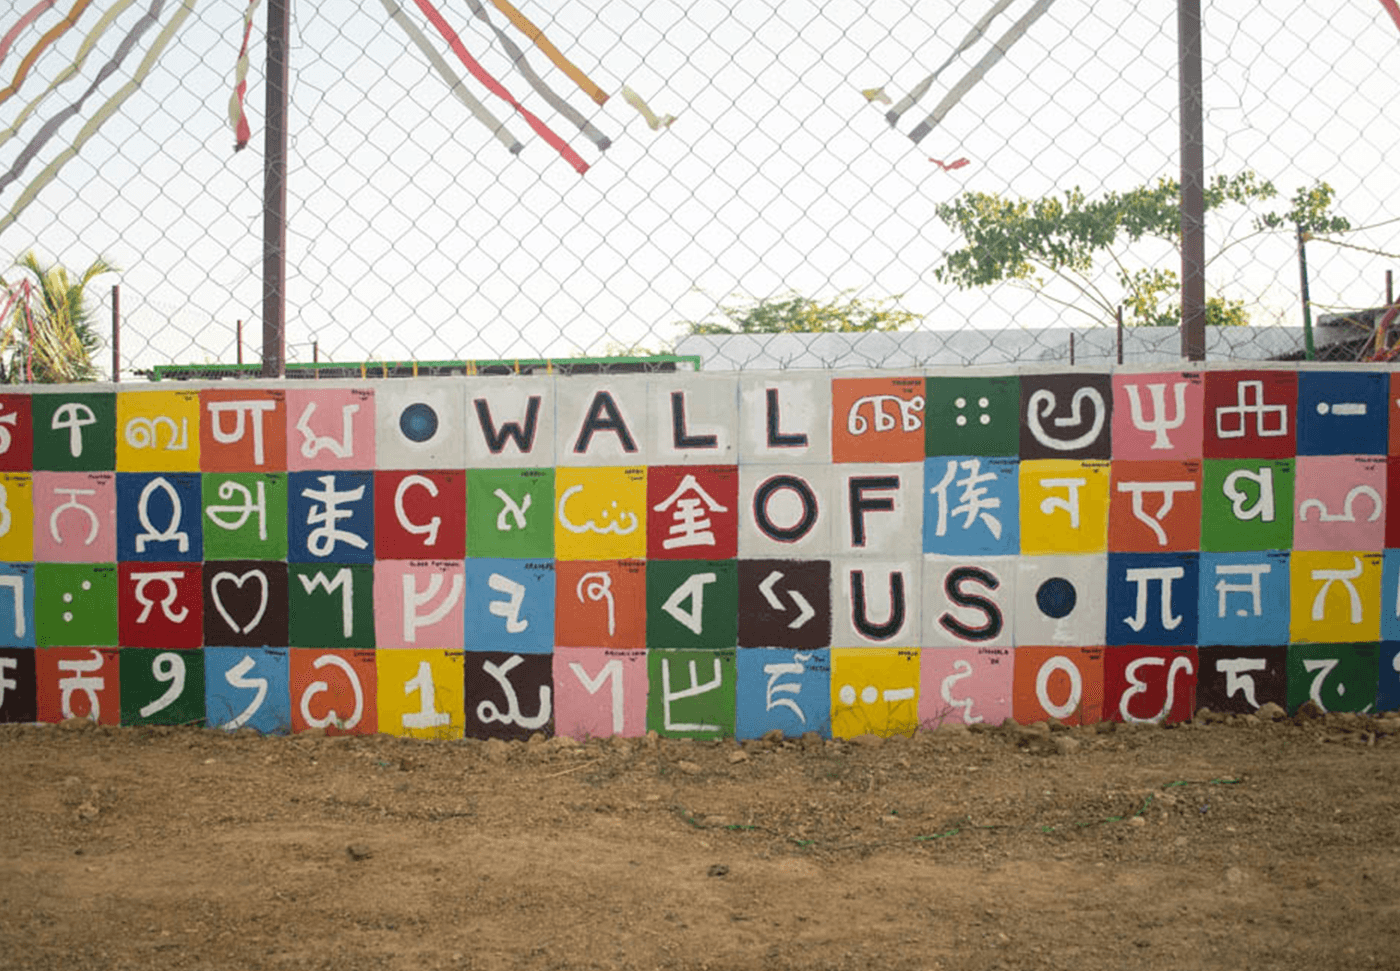 Wall of Us Art